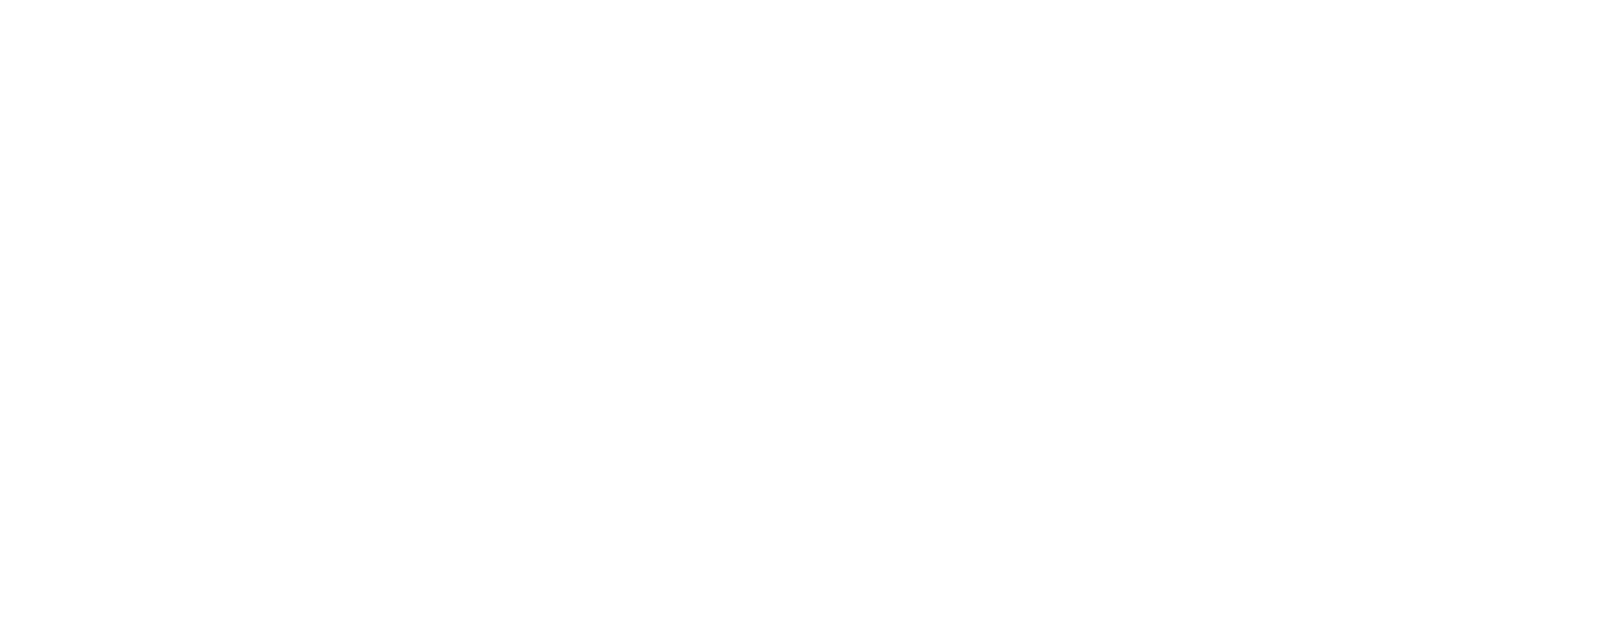 Energy Focus logo large for dark backgrounds (transparent PNG)